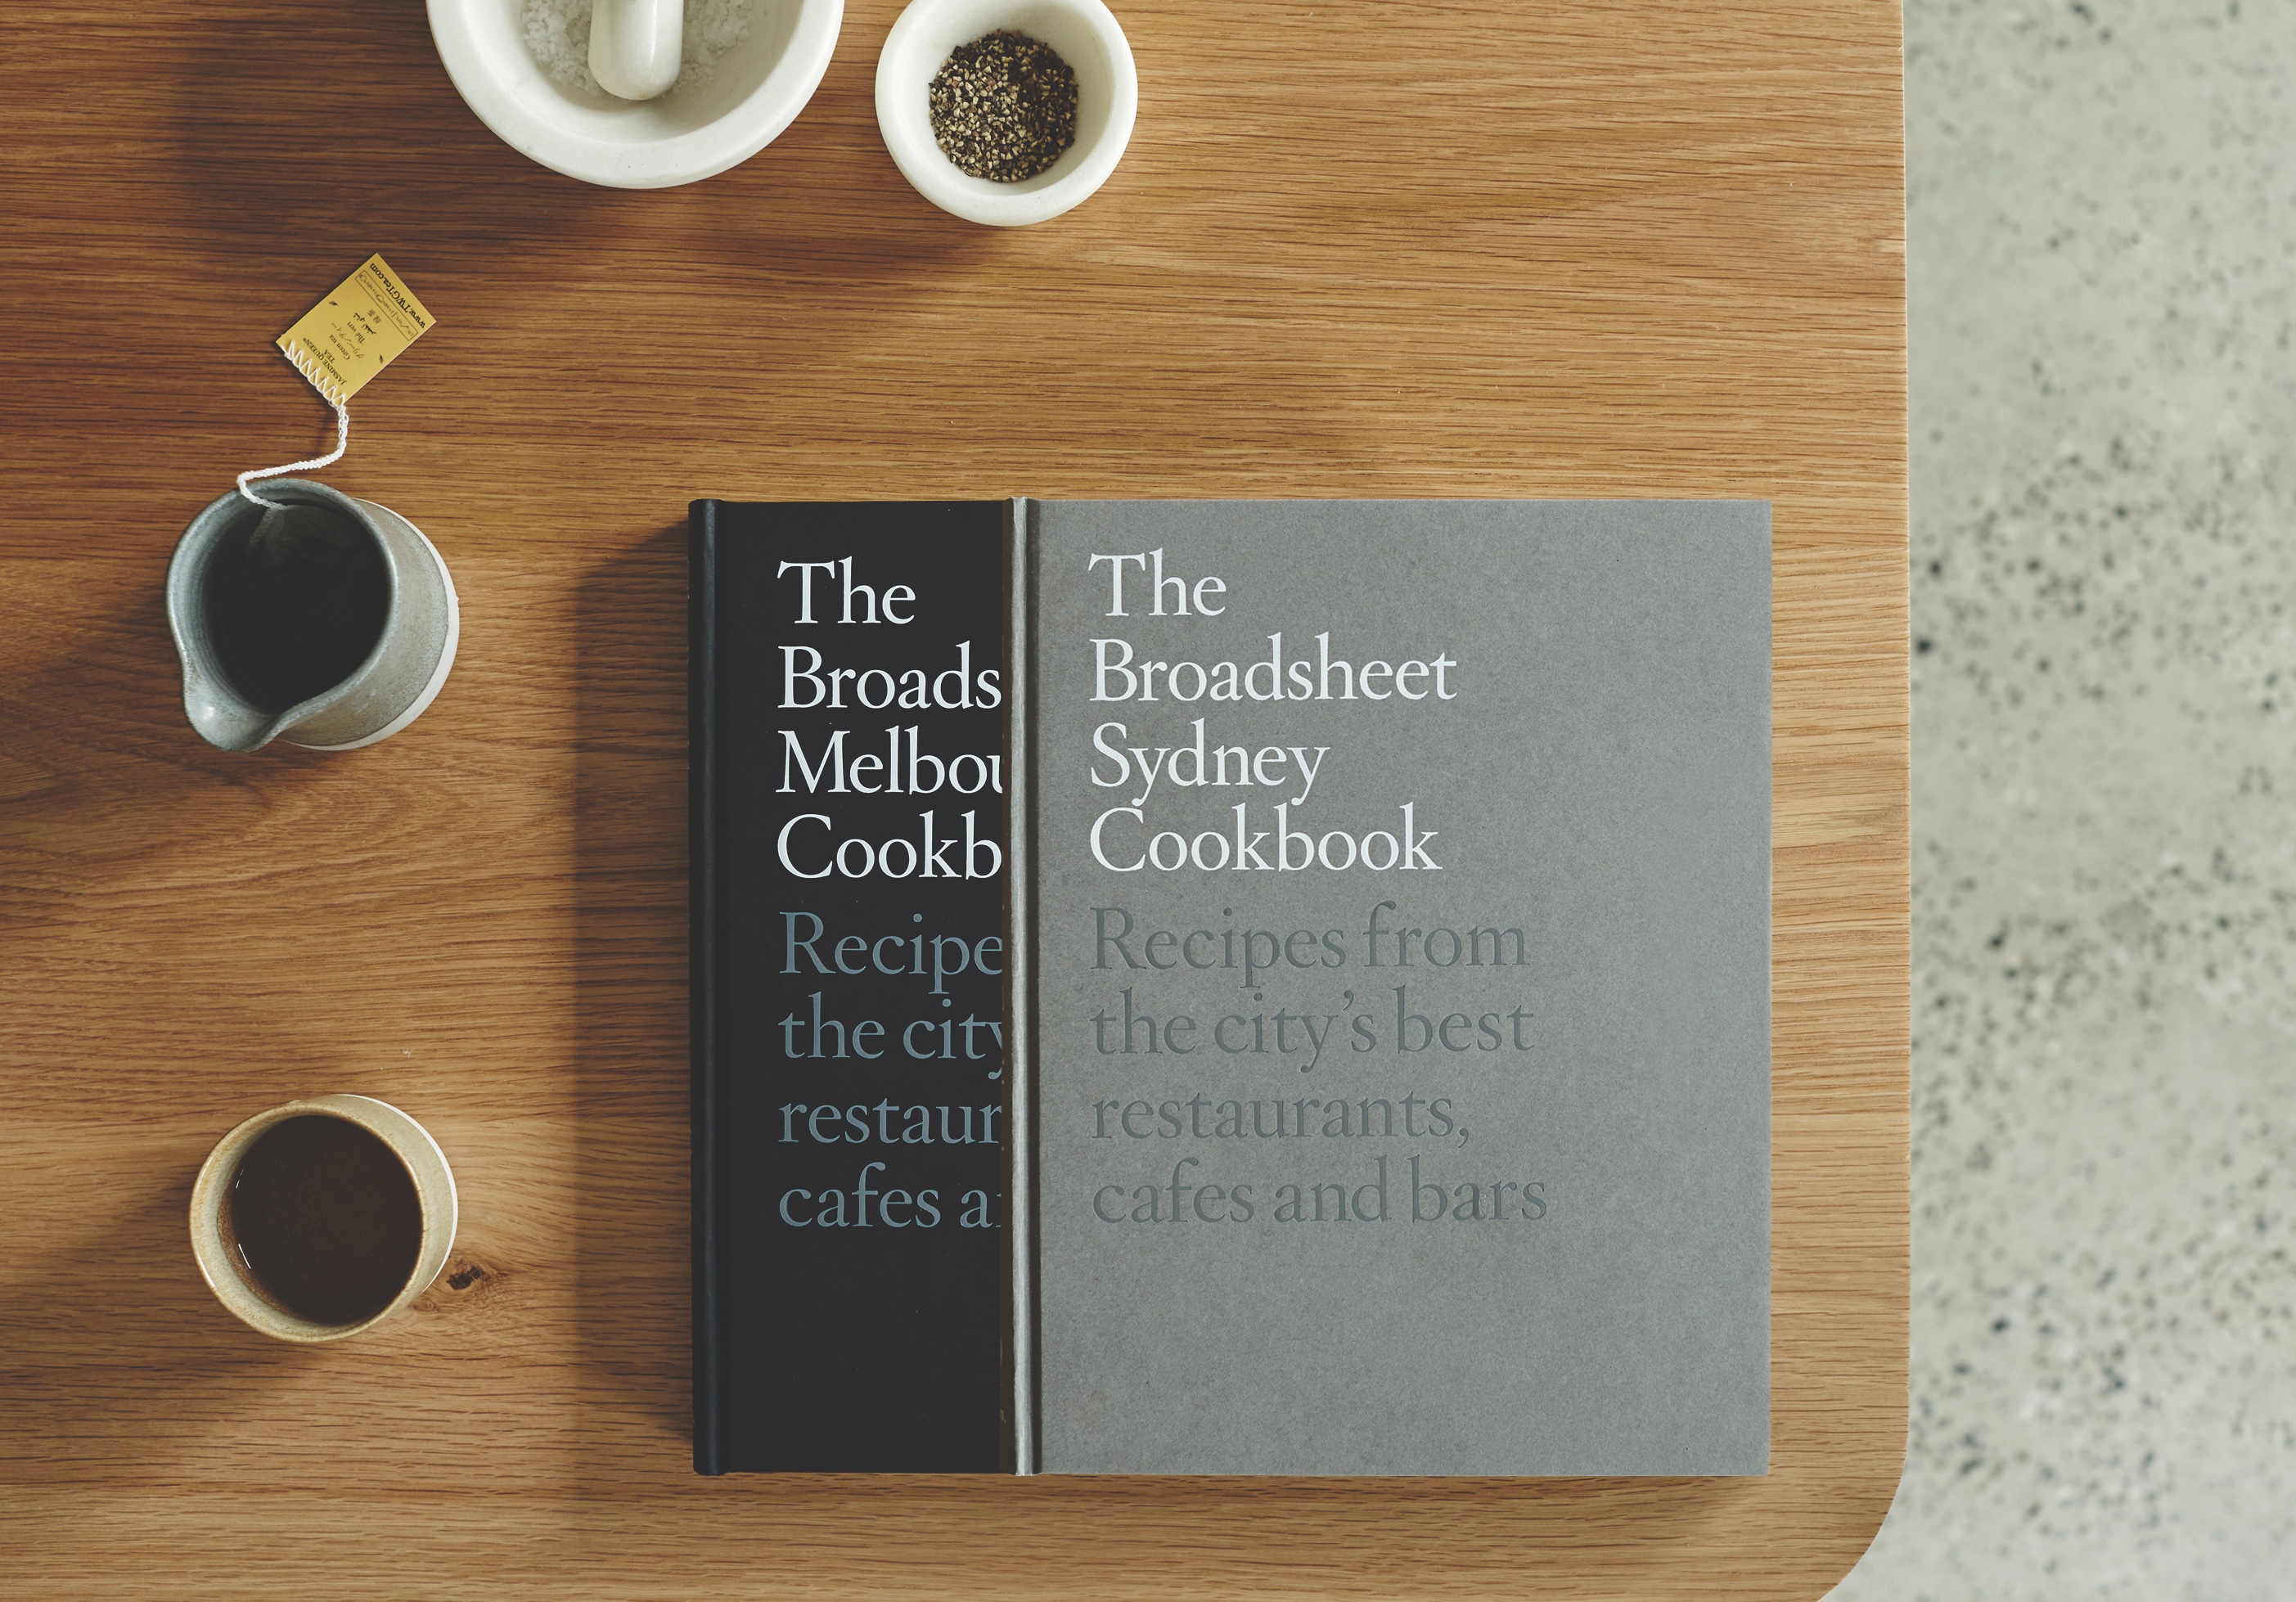 November 2015 – The Broadsheet Melbourne Cookbook and The Broadsheet Sydney Cookbook go on sale | Photography by Kristoffer Paulsen
